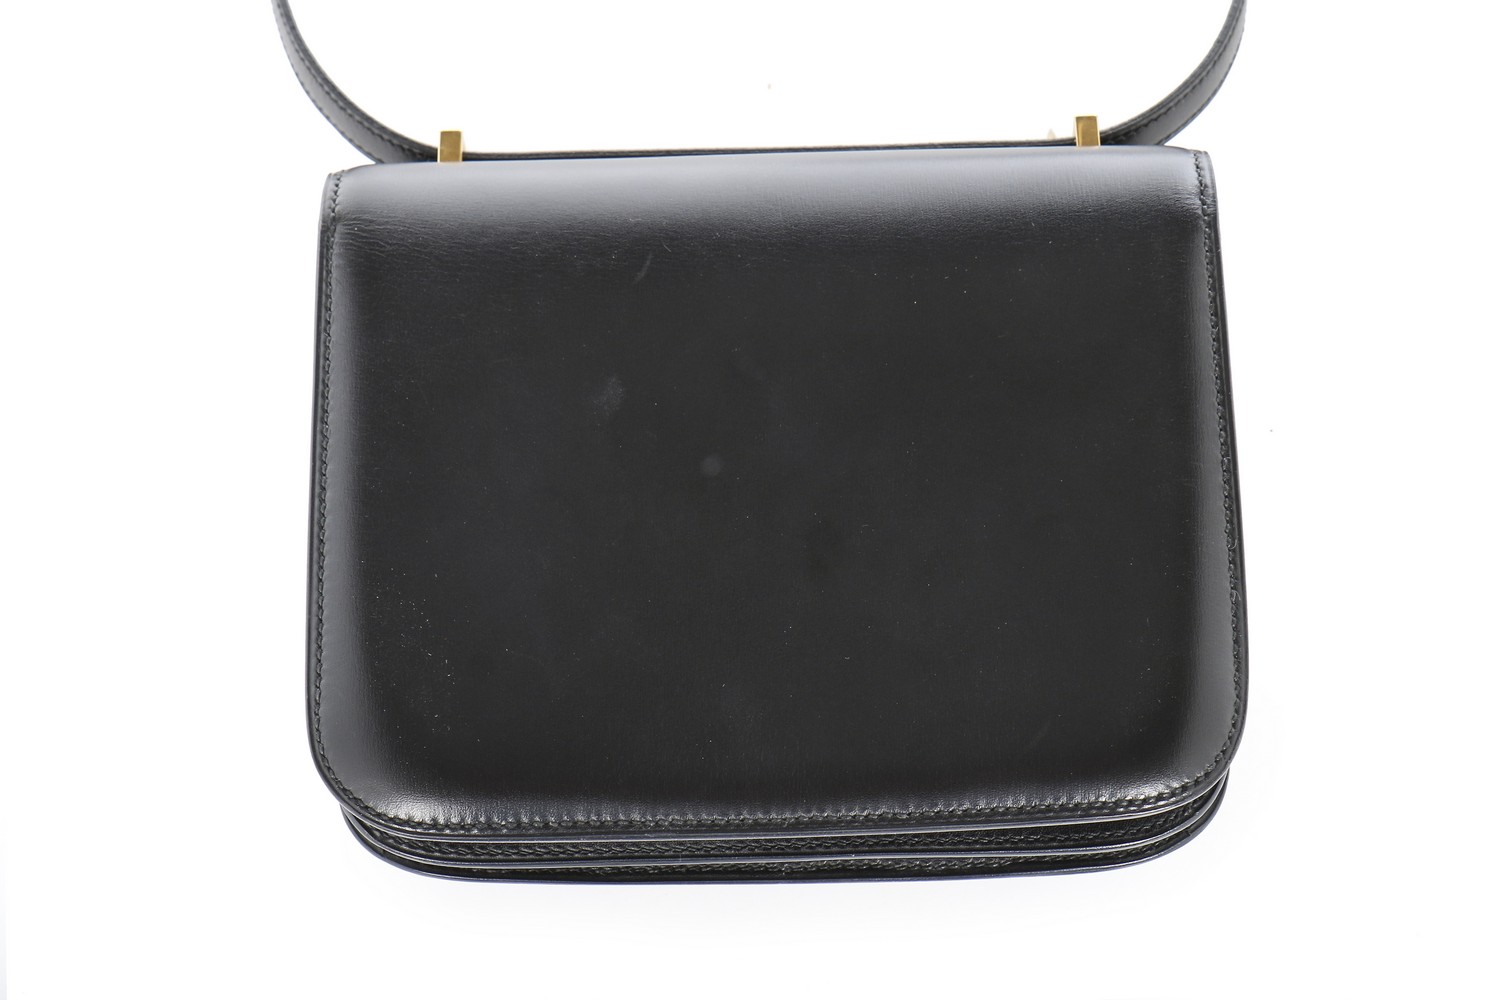 Lot 4 - An Hermès black box leather mini Constance bag